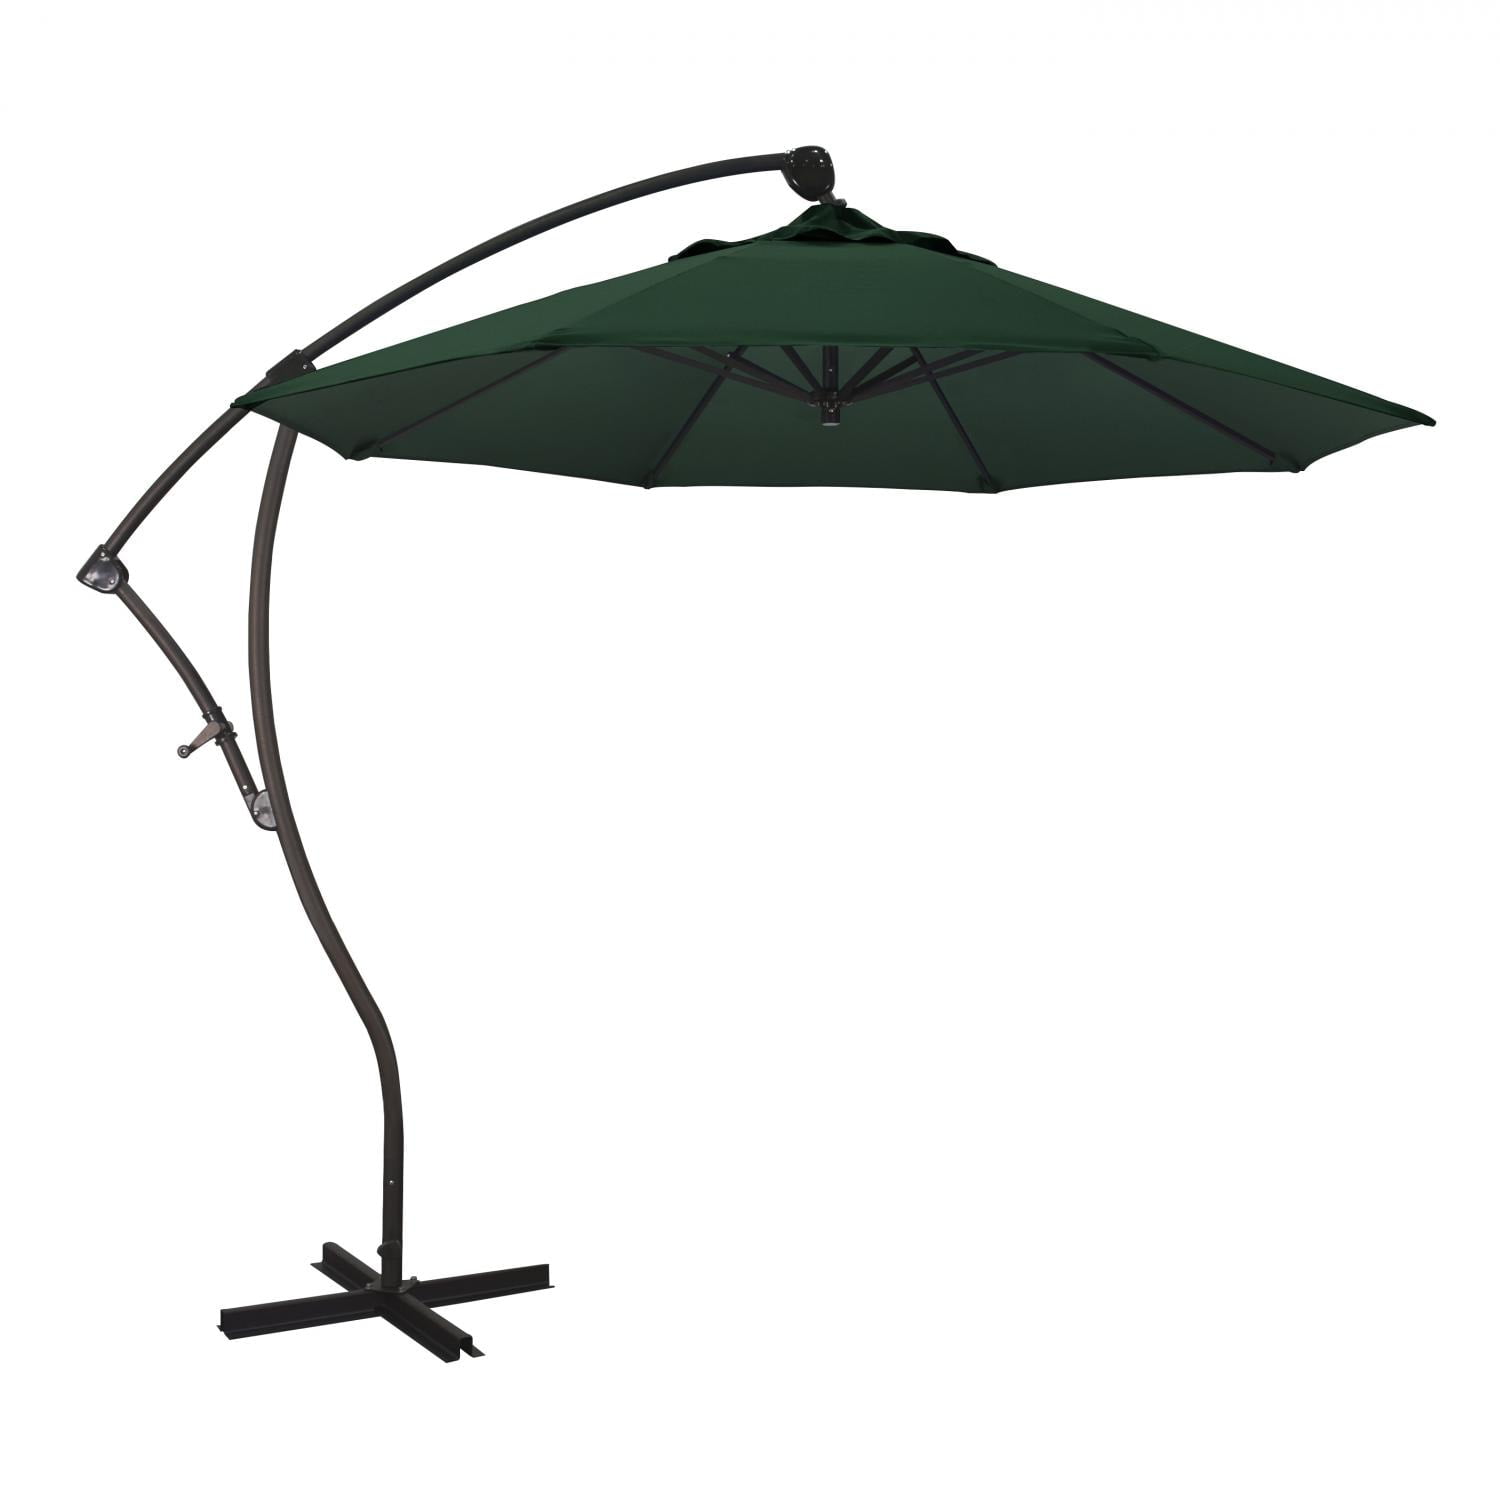 Californiaumbrella Ba908117-f08 Cantilever Umbrella, Hunter Green - 9 Ft. X 8 Ribs